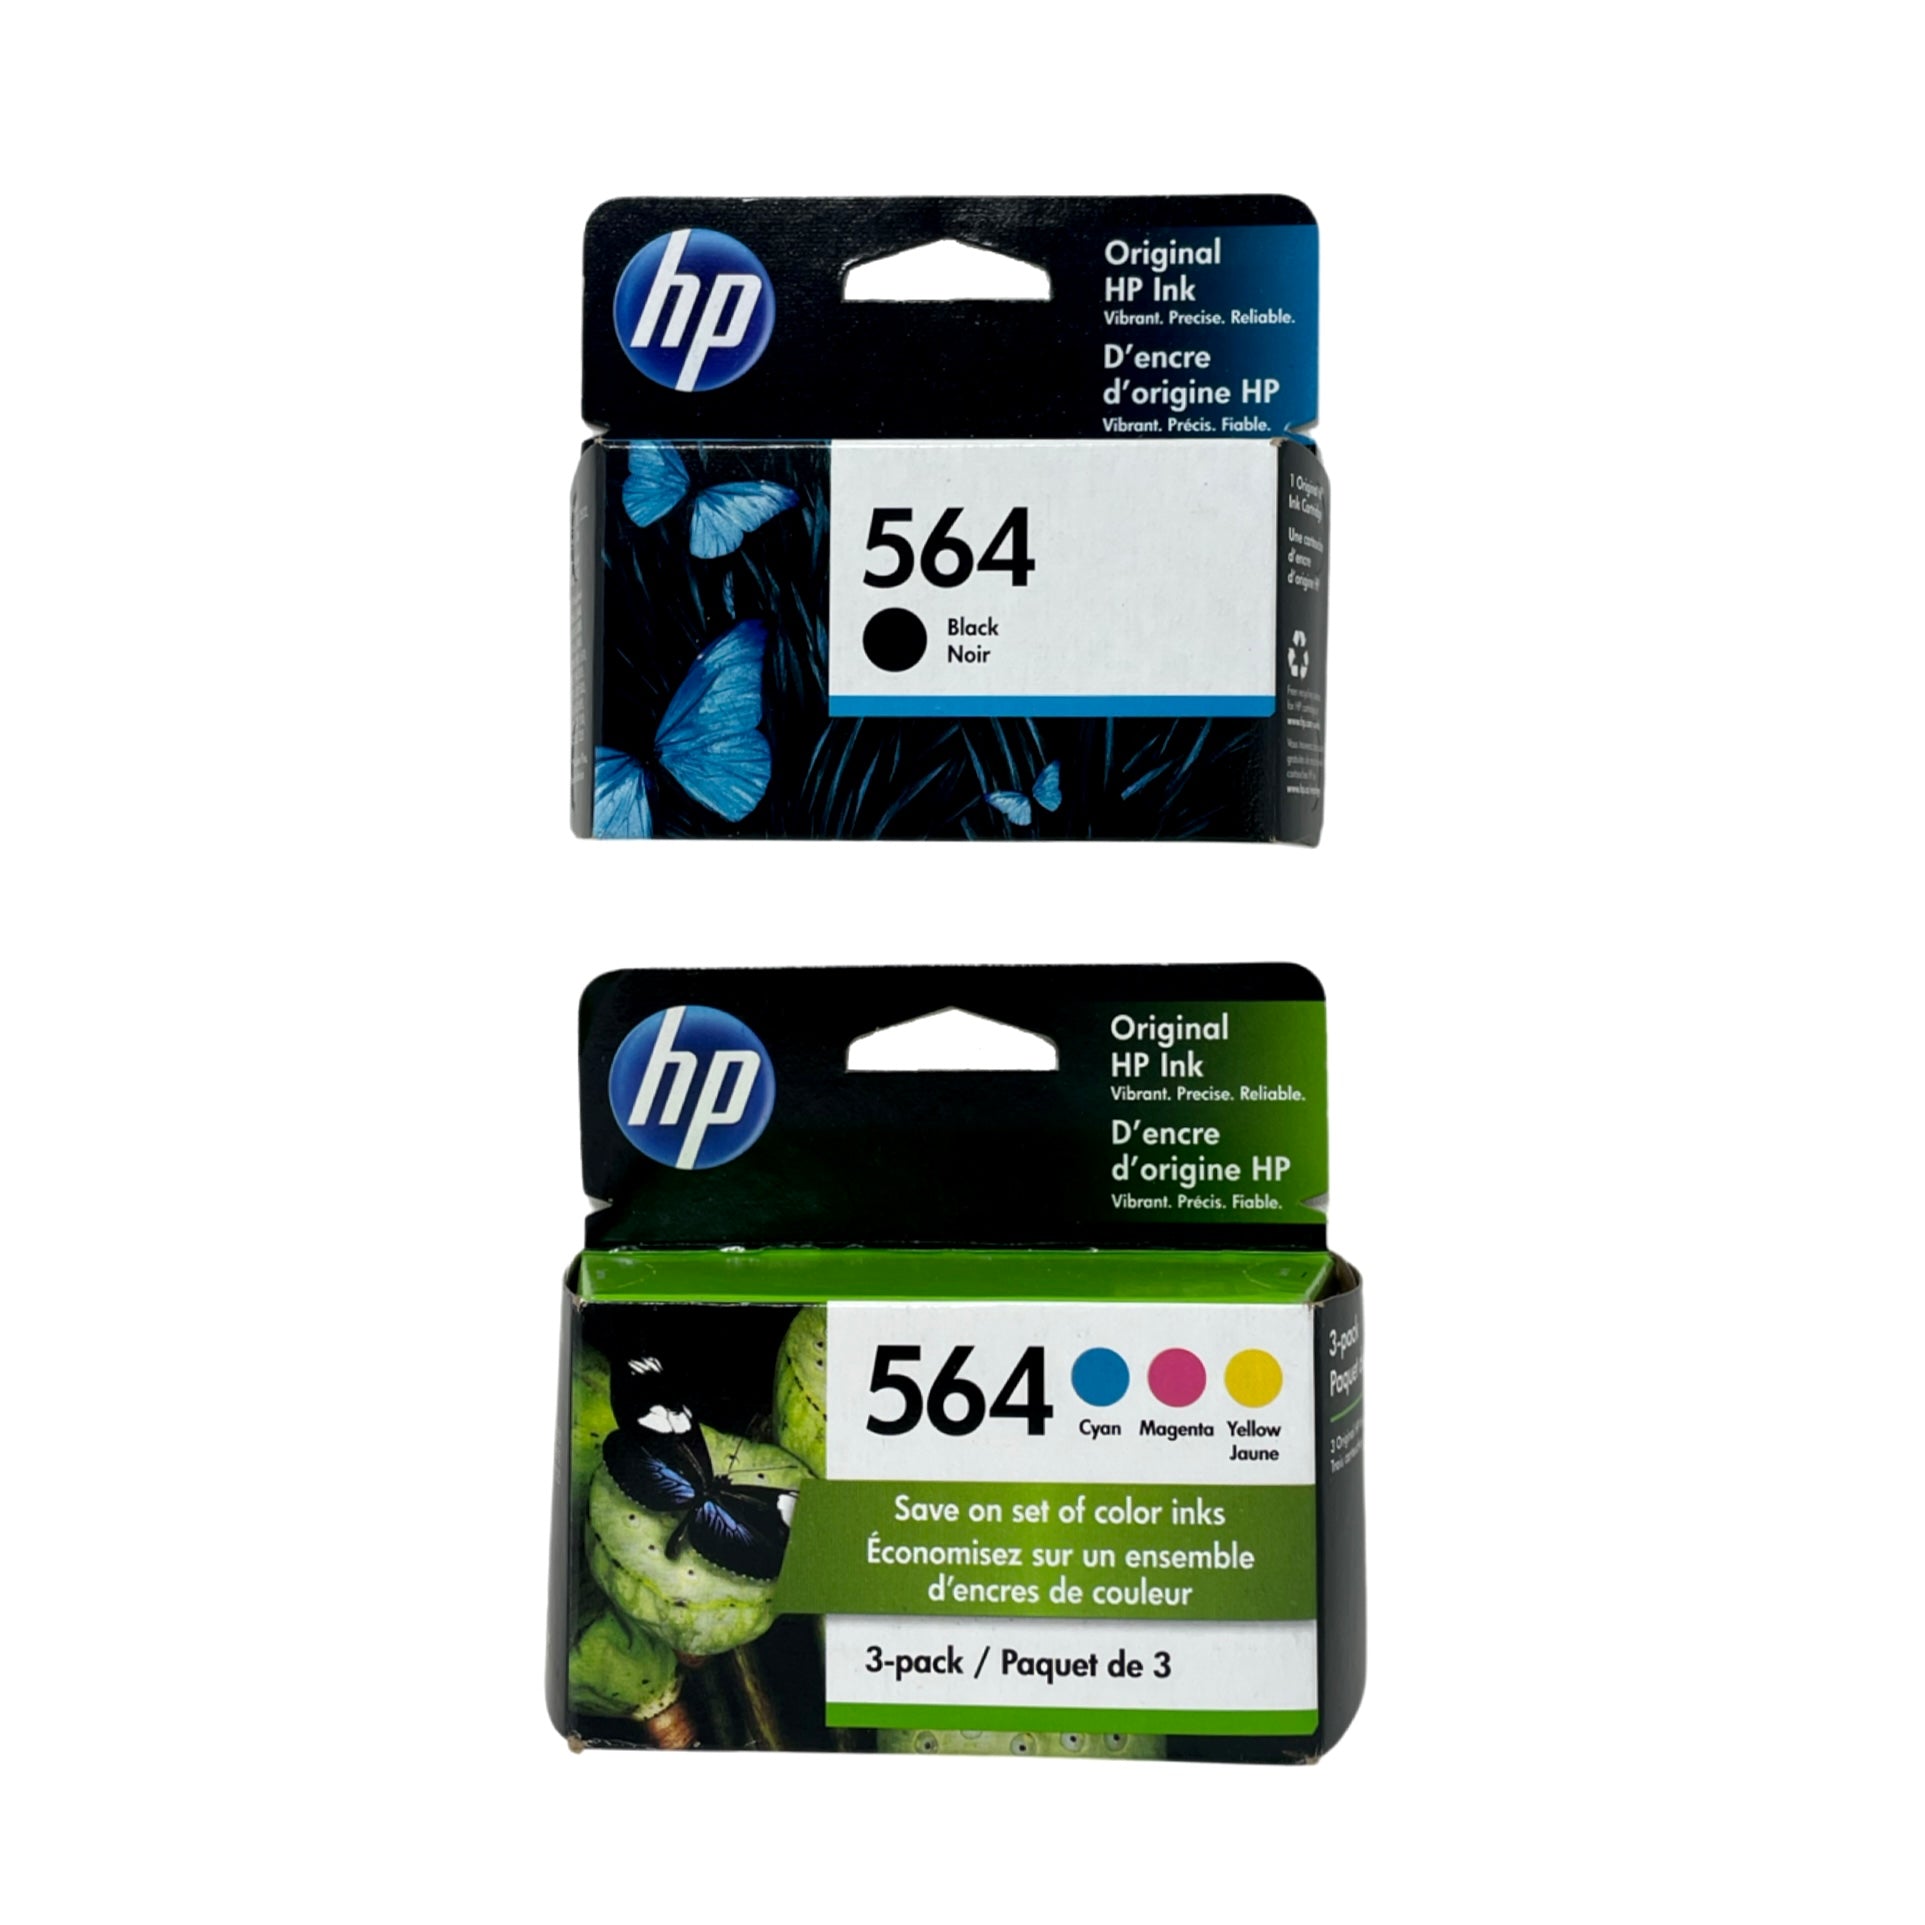 HP 564 Ink 4 Pack - Black Cyan Magenta Yellow - Original HP Ink Cartridges (3YQ22AN)